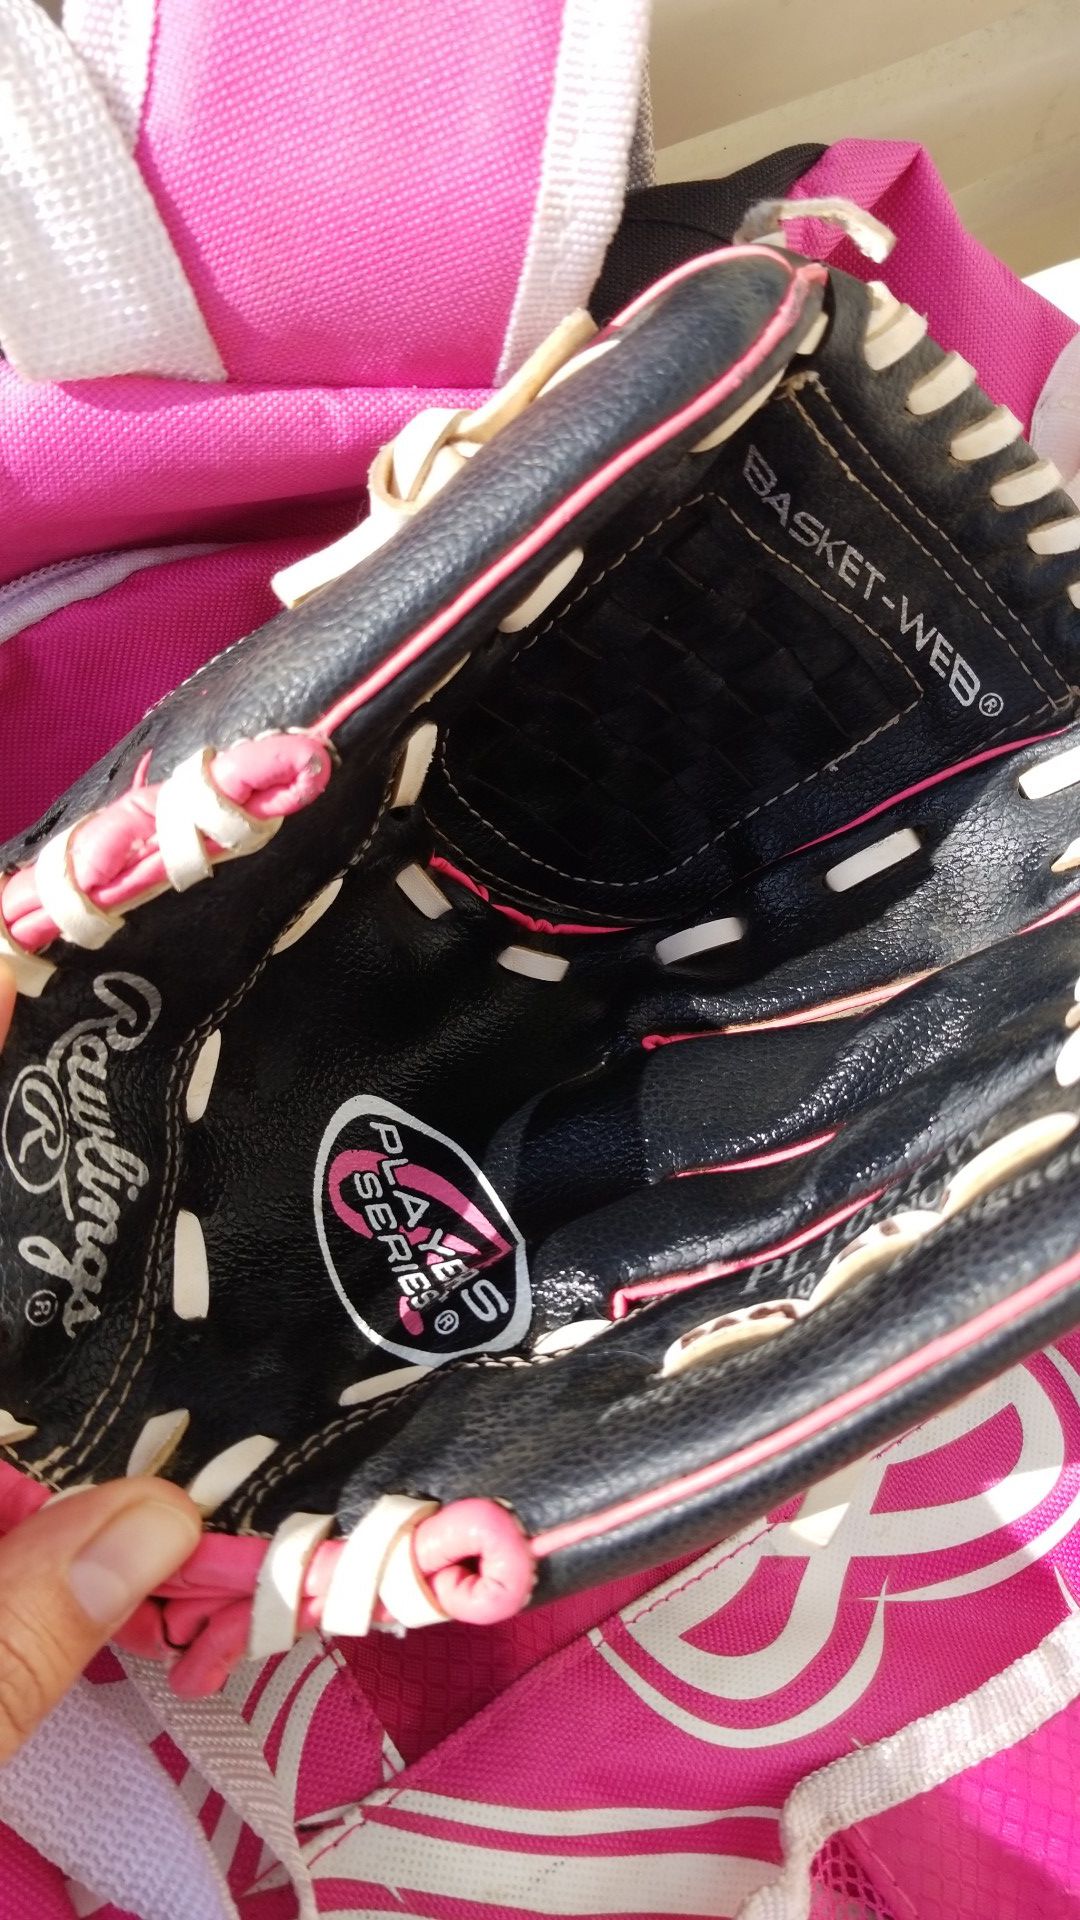 Softball/ baseball glove 10 1/2